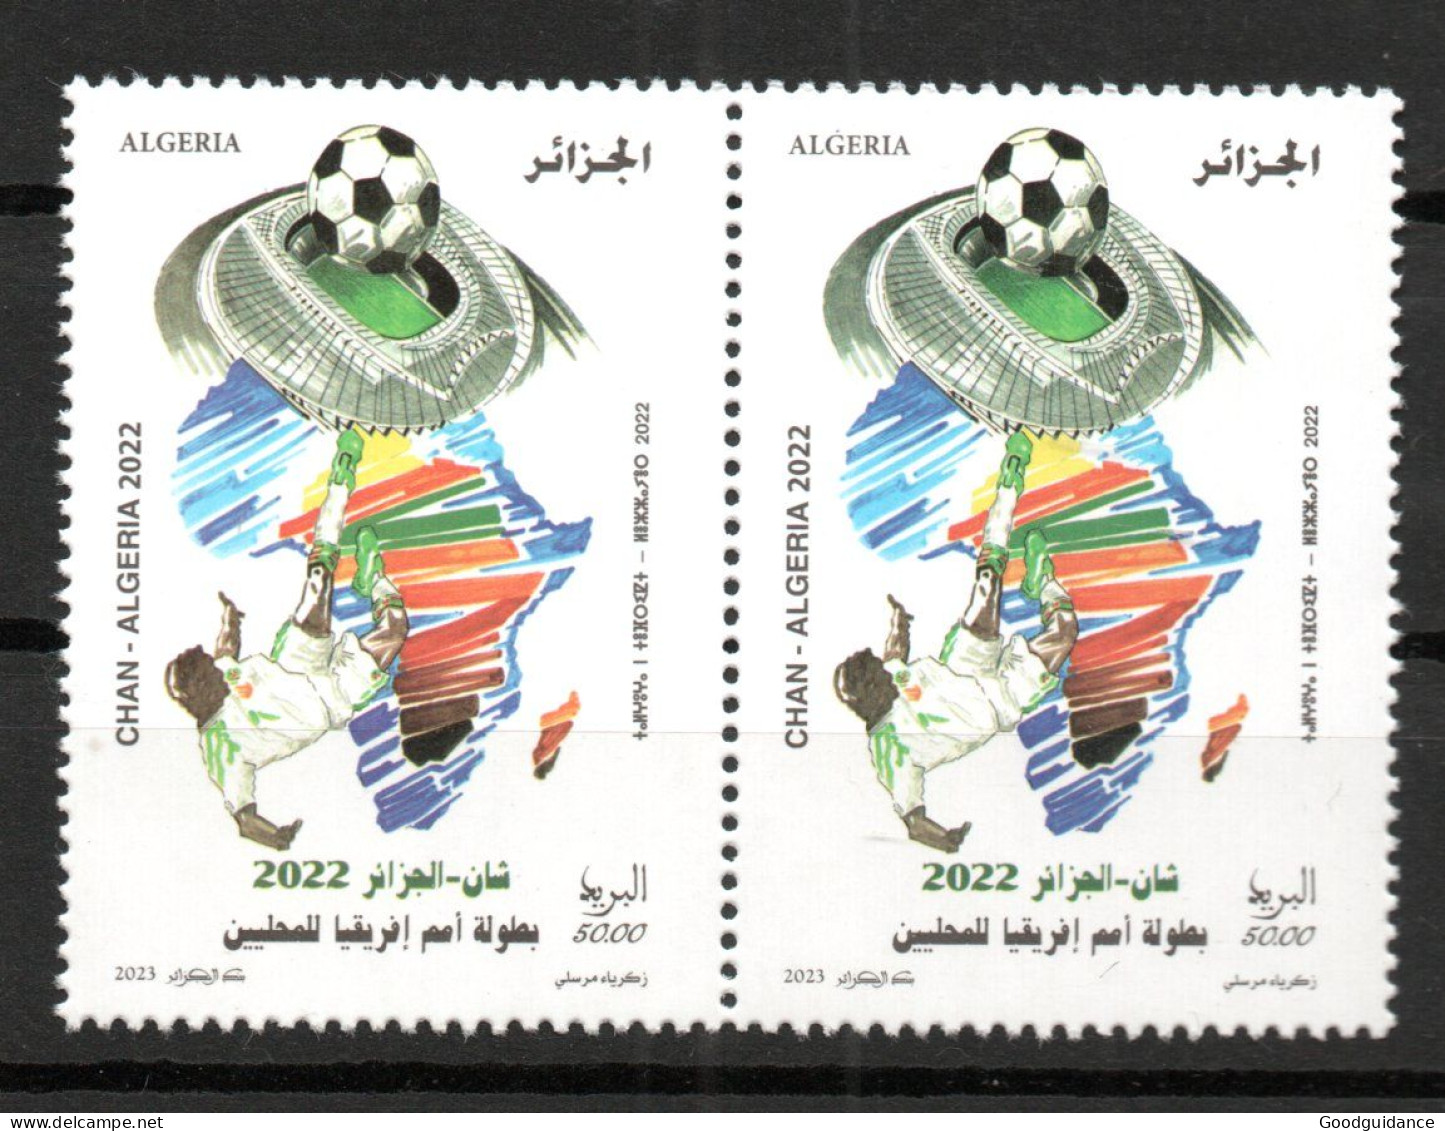 2023 - Algeria - The 7th Africa Cup Of Nations Football Championships 2022- Soccer- Stadium - Map - Pair- Set 1v.MNH** - Fußball-Afrikameisterschaft